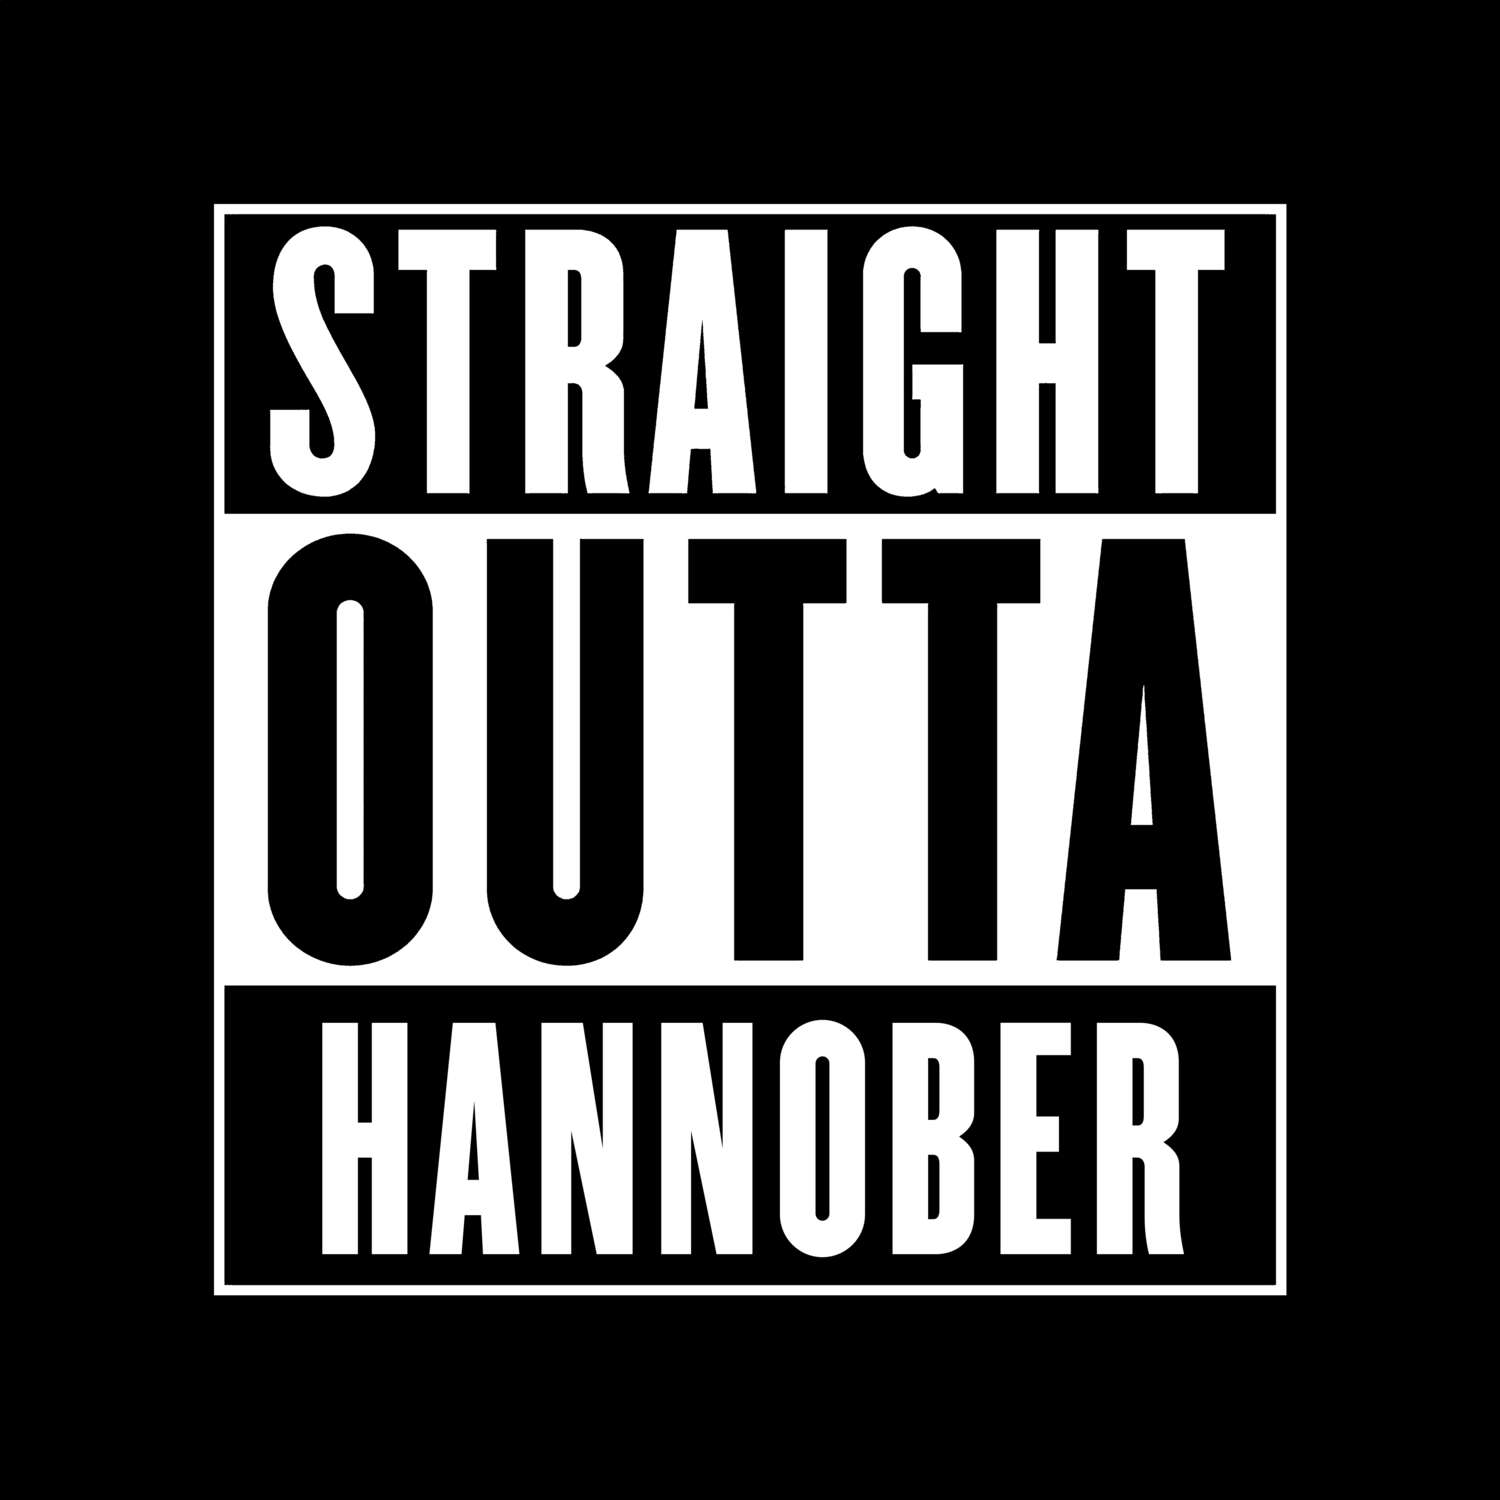 Hannober T-Shirt »Straight Outta«